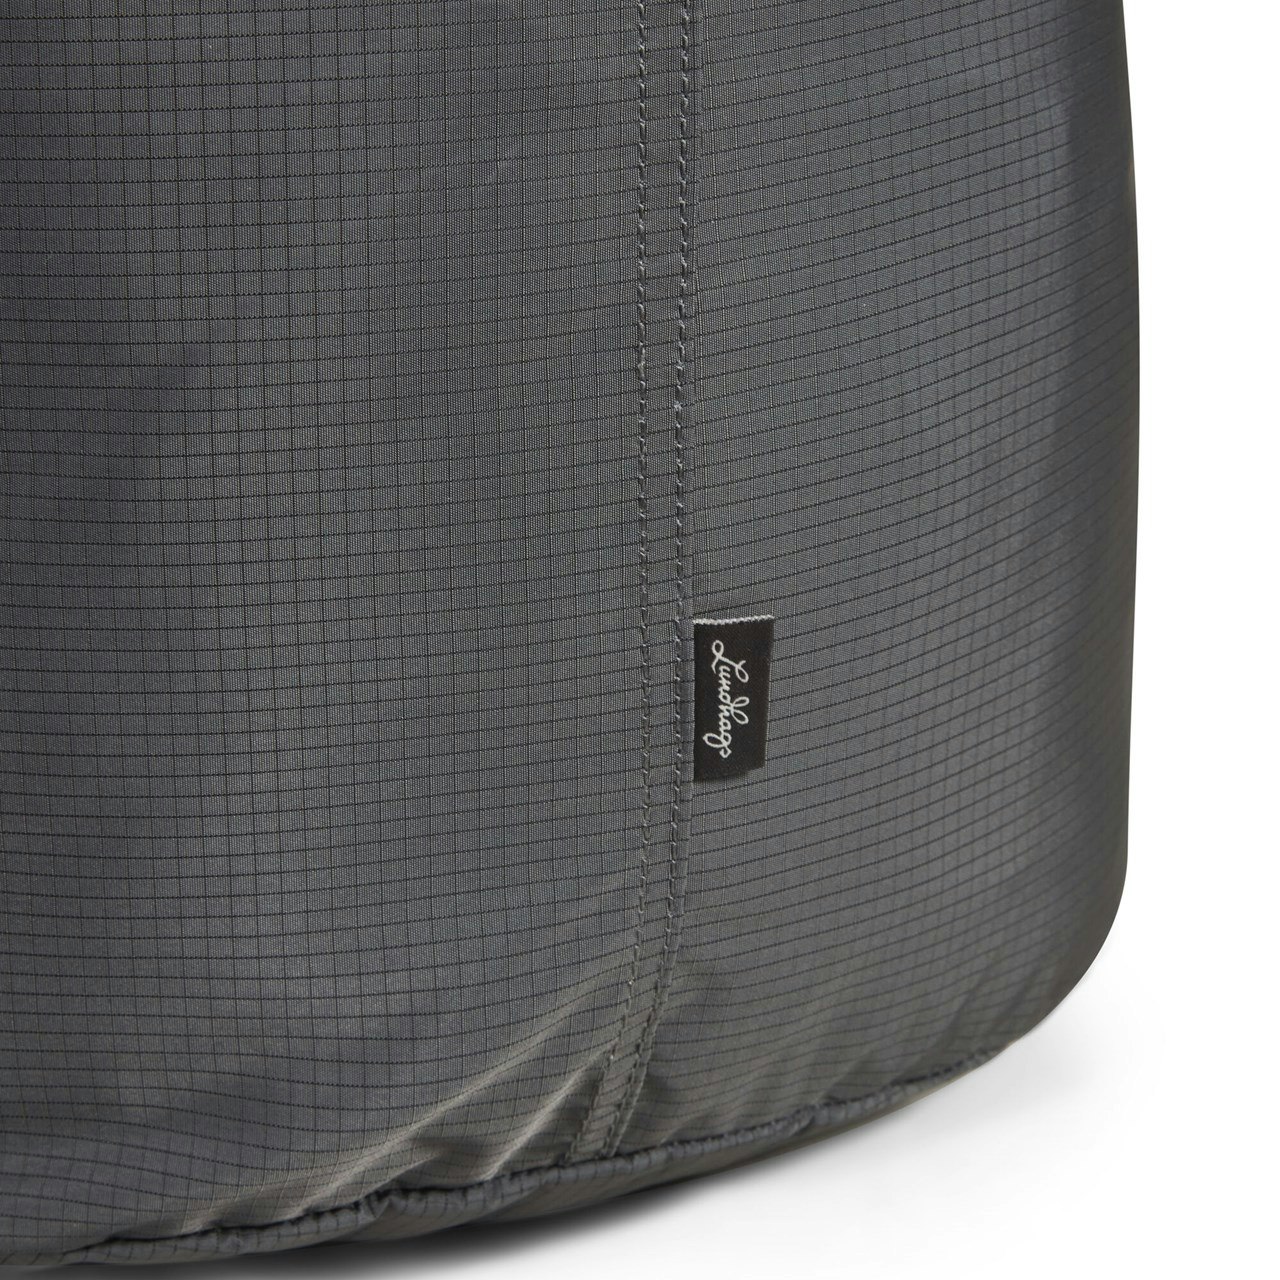 Lundhags Core Gear Bag 10L